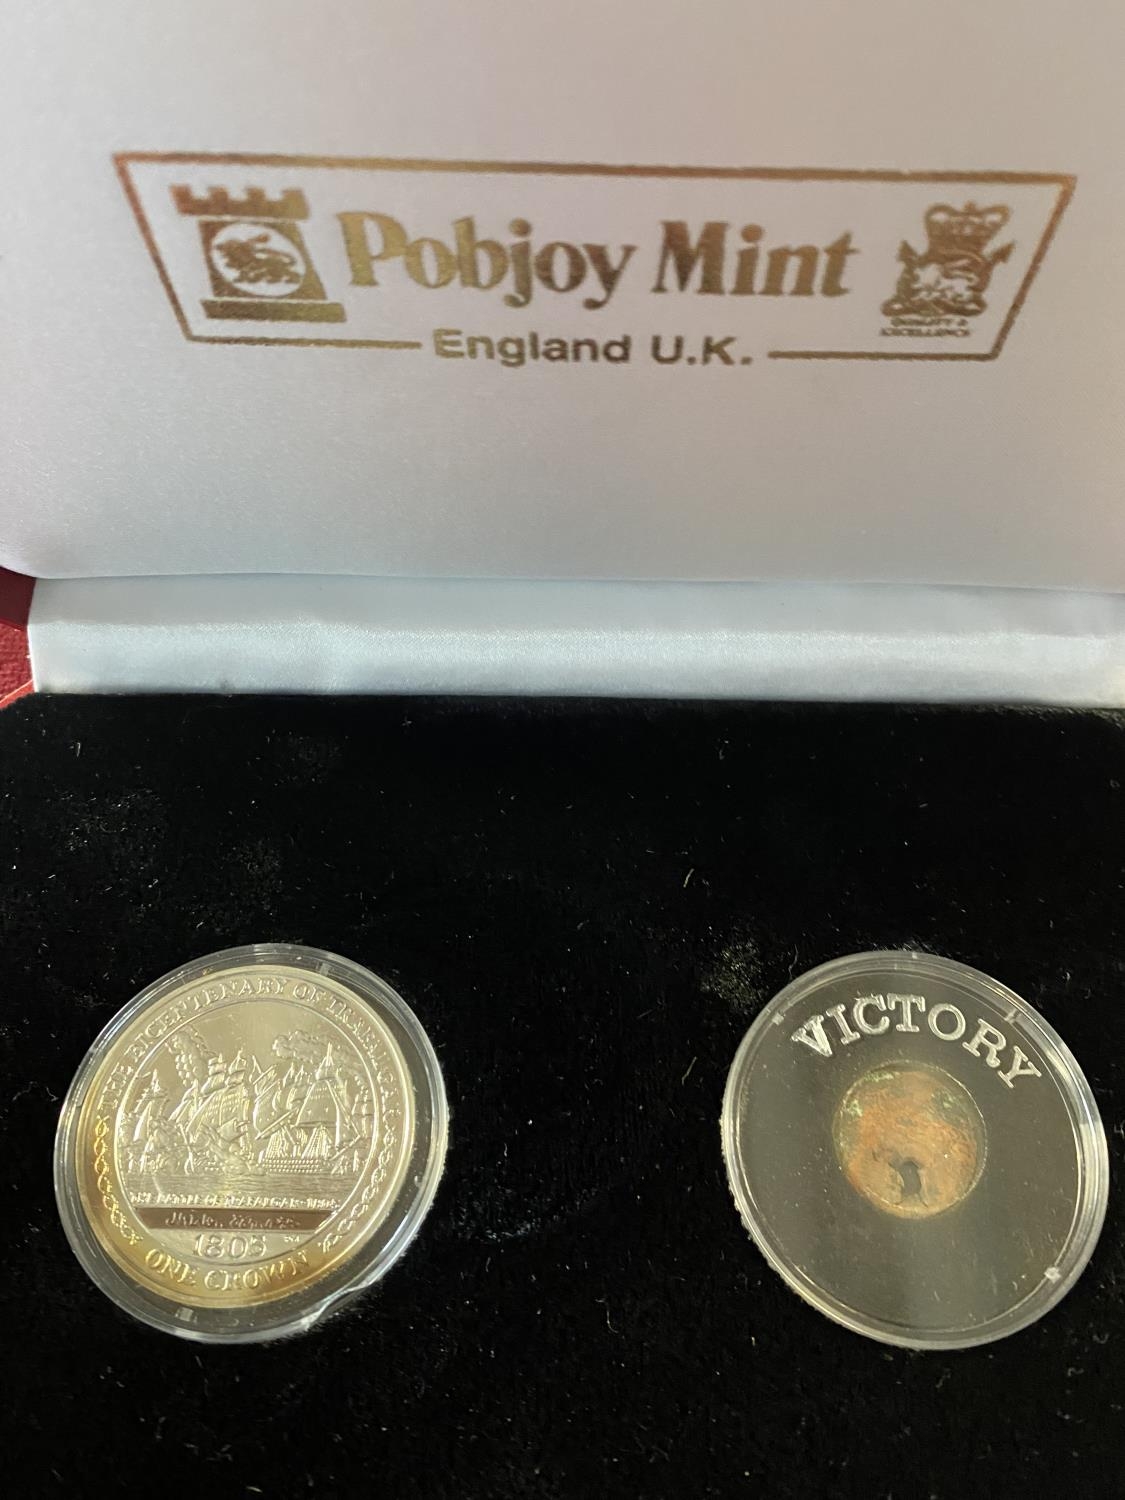 A Pobjoy mint bicentenary of Trafalgar commemorative coin set